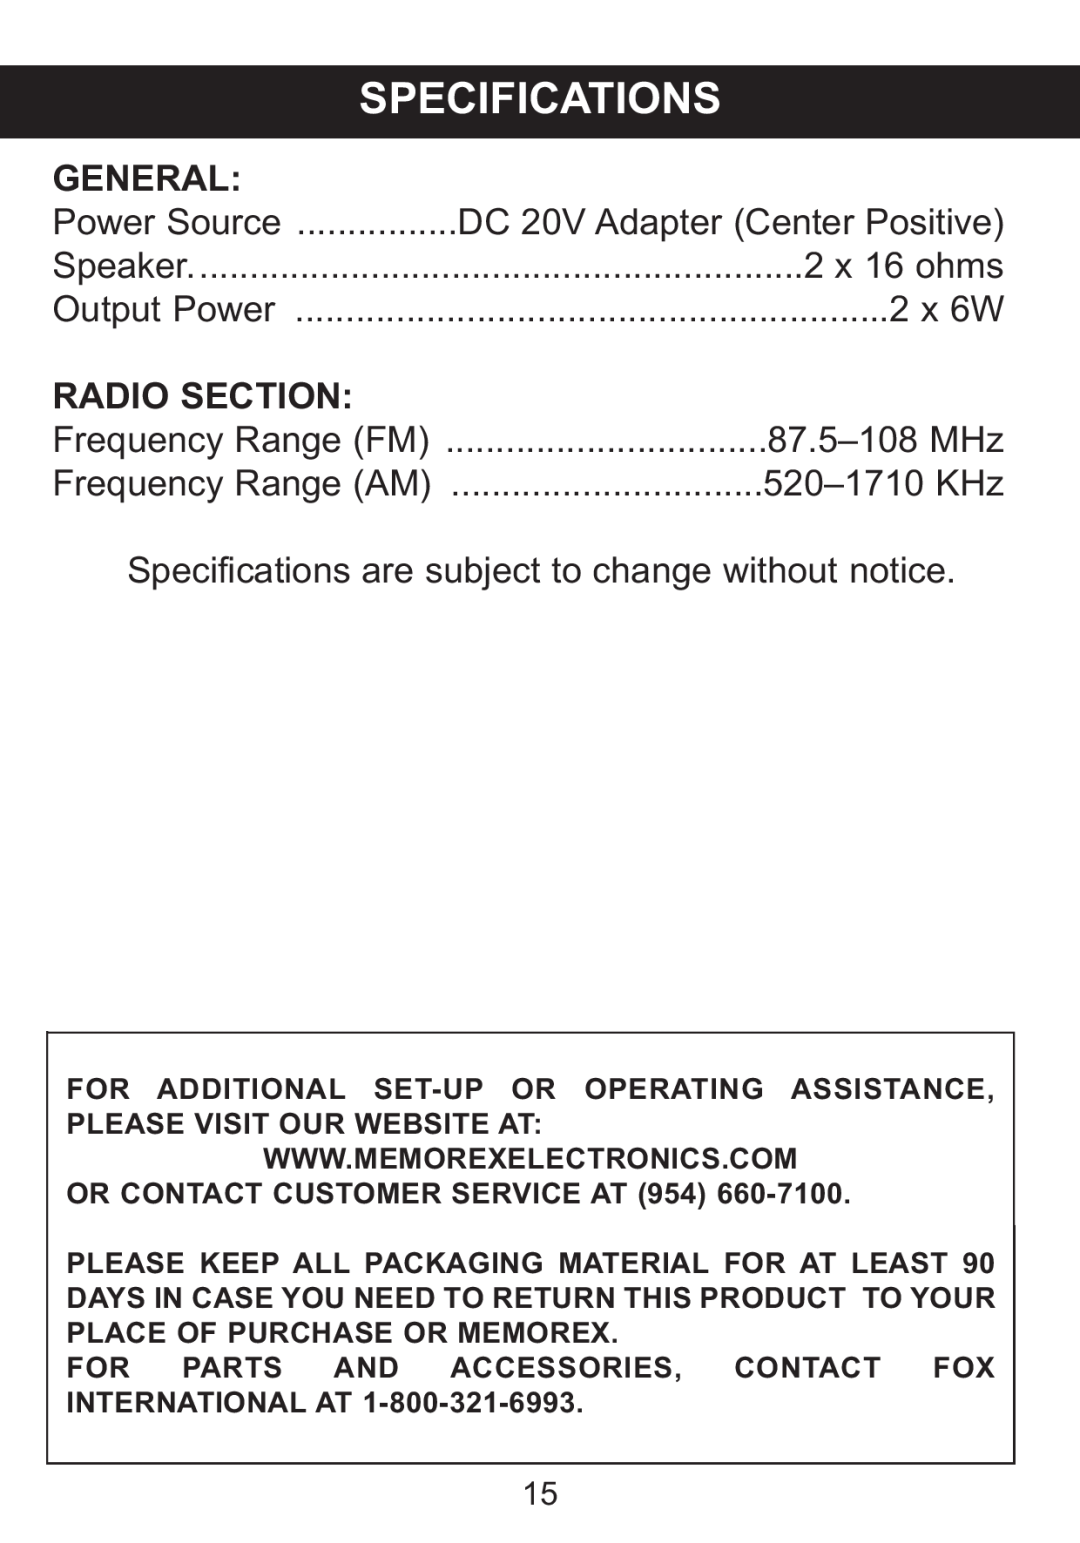 Memorex Mi1006 Specifications, General, DC 20V Adapter Center Positive, Power Source, 2 x 16 ohms, 2 x 6W, 87.5–108MHz 